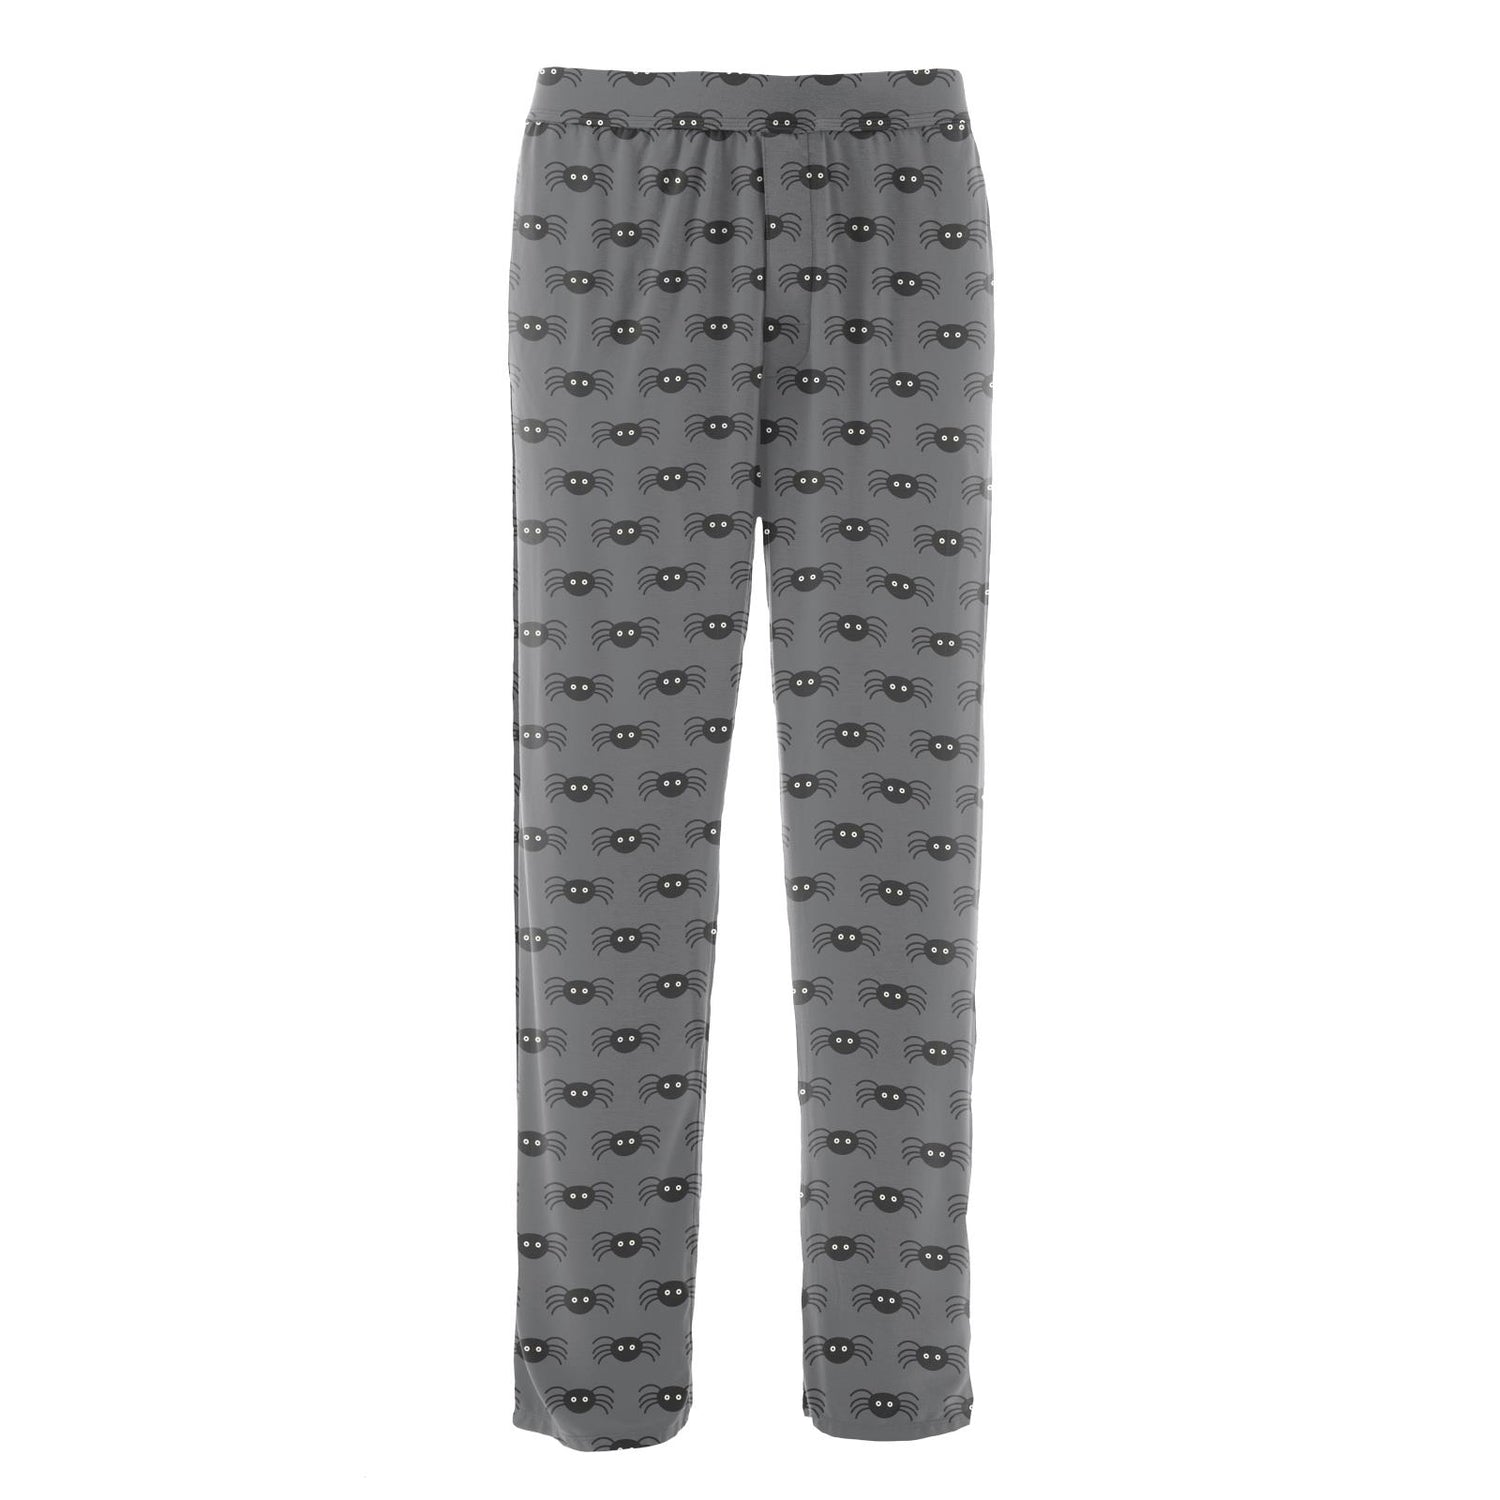 Men's Print Pajama Pants in Stone Spiders